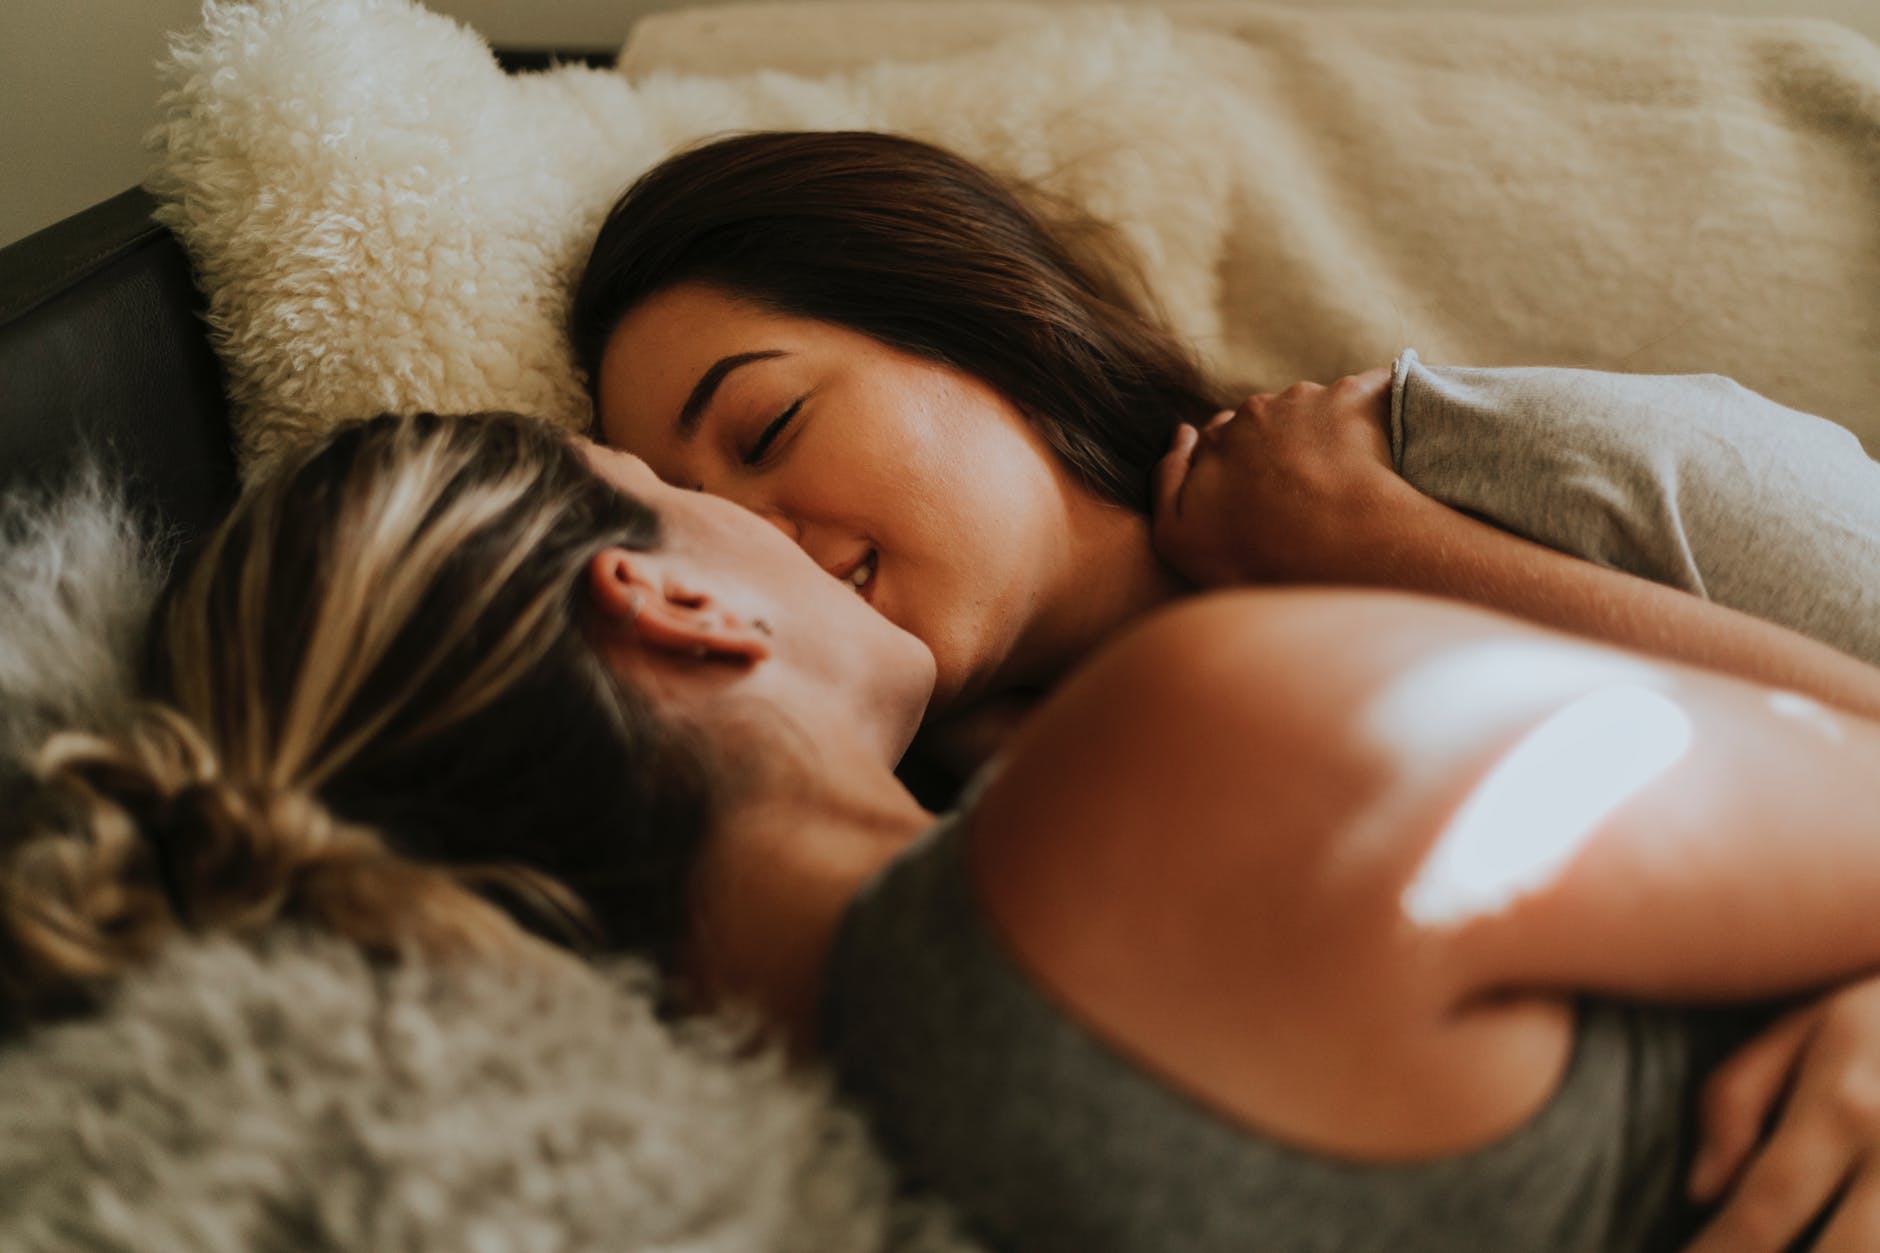 diwakar puri recommends Teen Having Sex In Bed